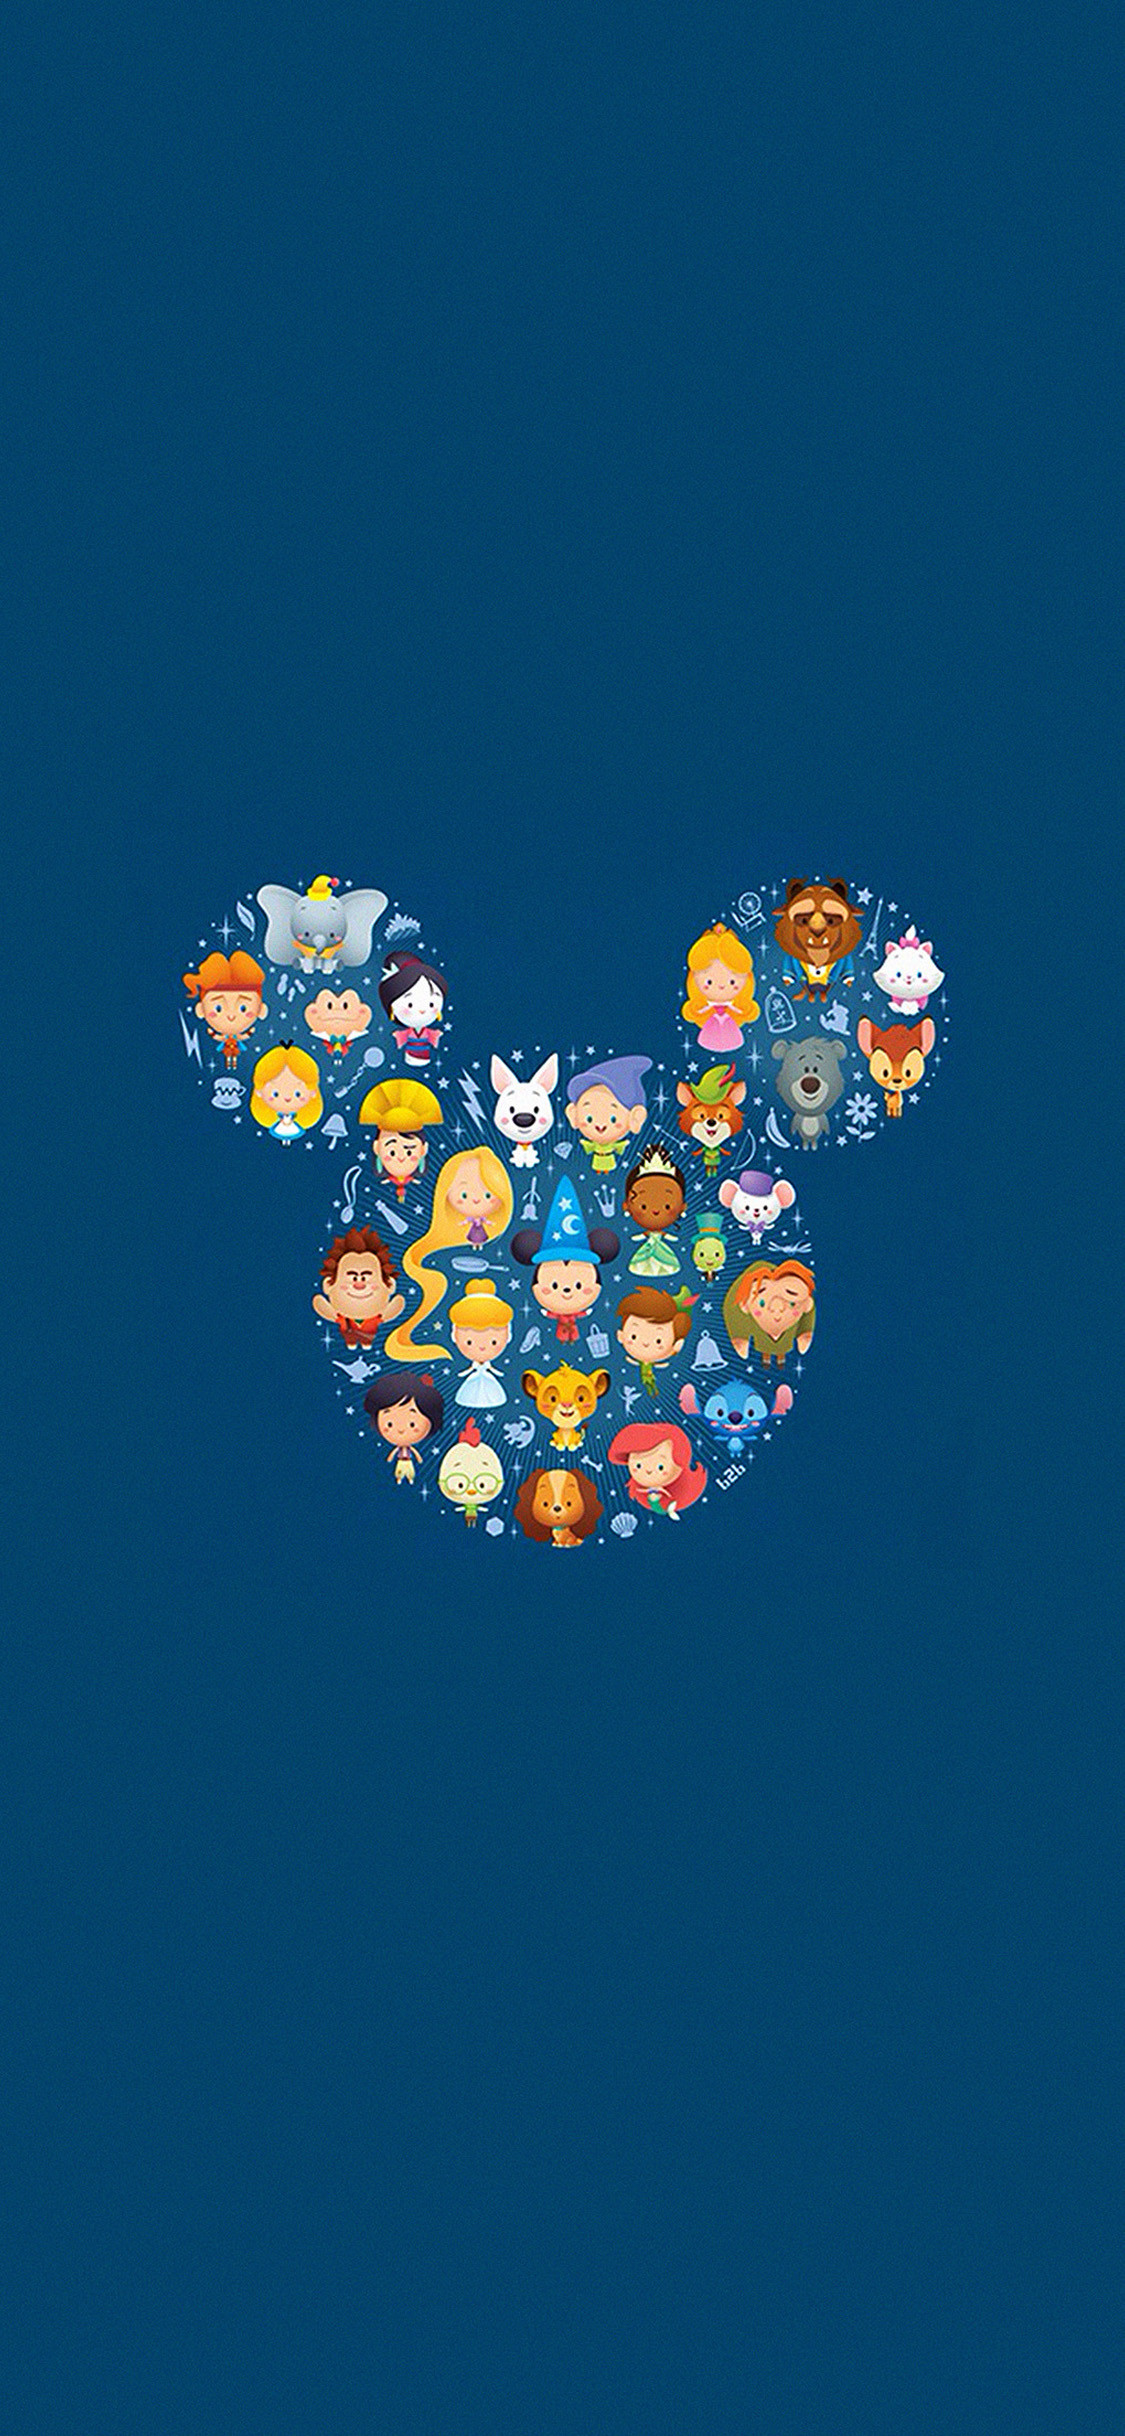 Free download 1125x2436 Cute Disney Characters Iphone 8 Wallpaper ...